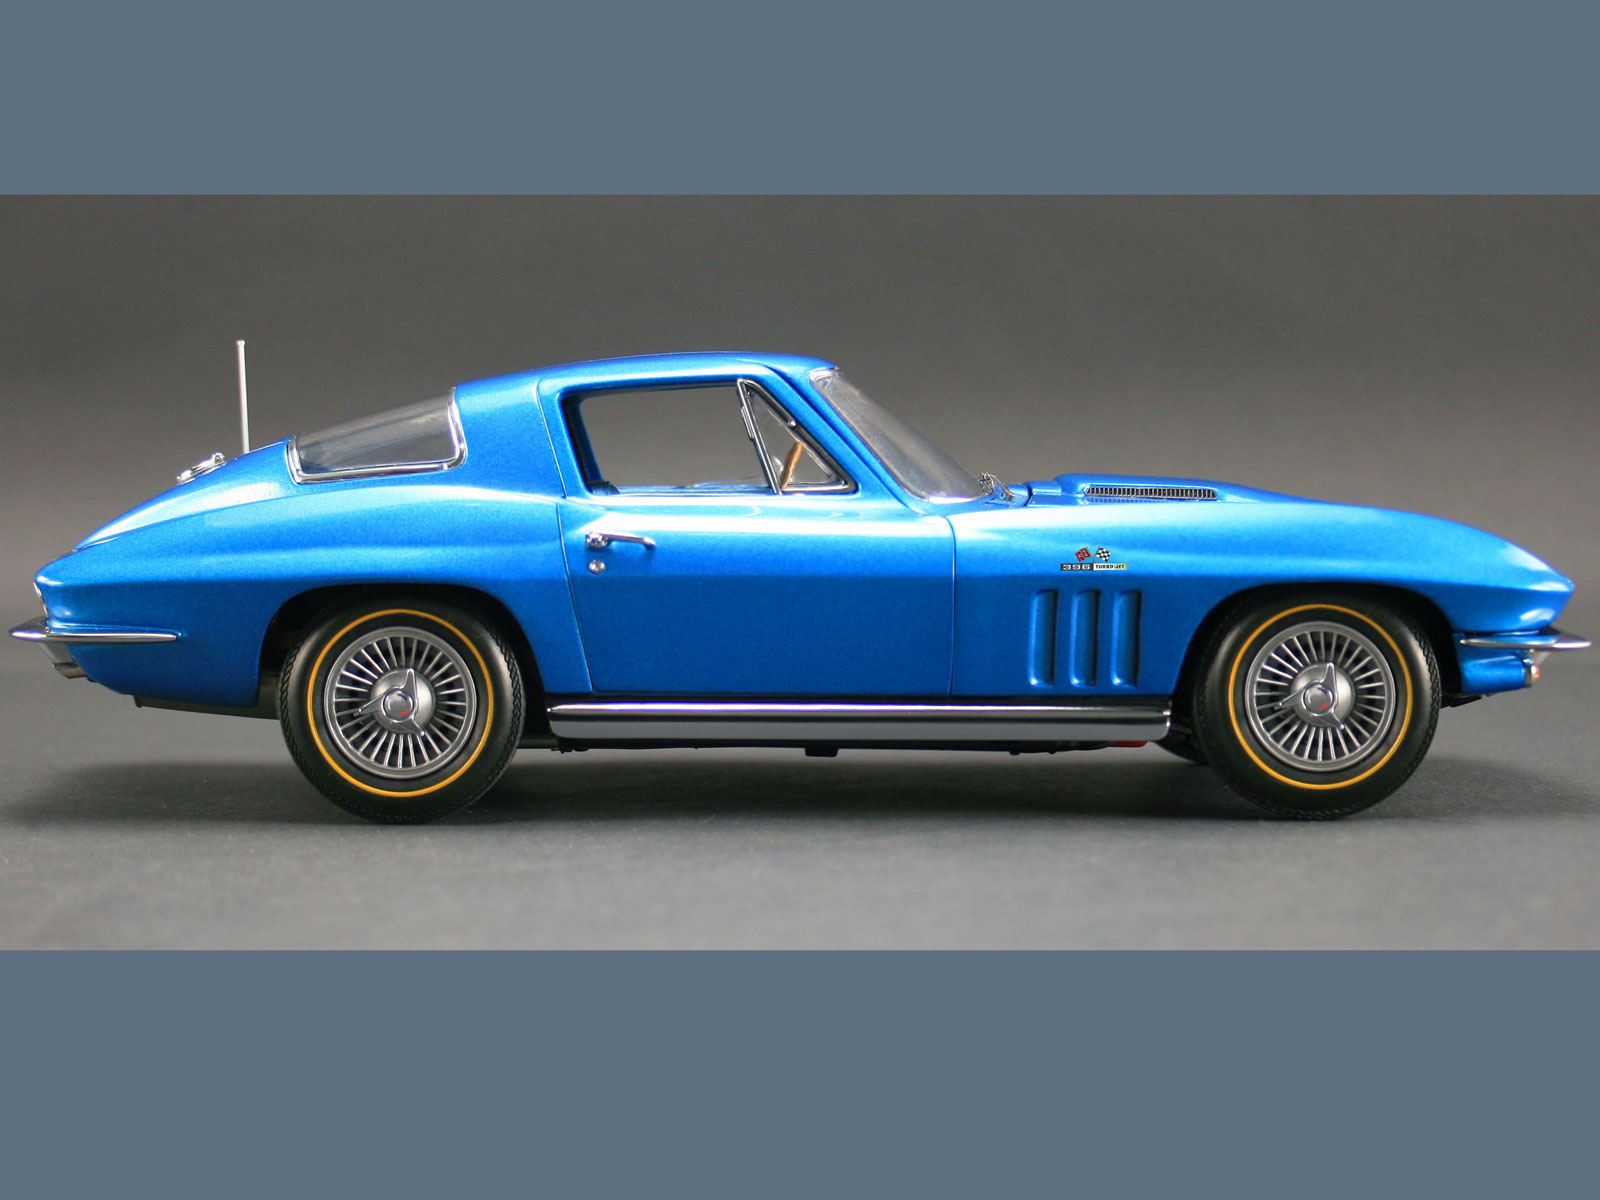 1965 Chevy Corvette - looks just like my old corvette, wish I still ...